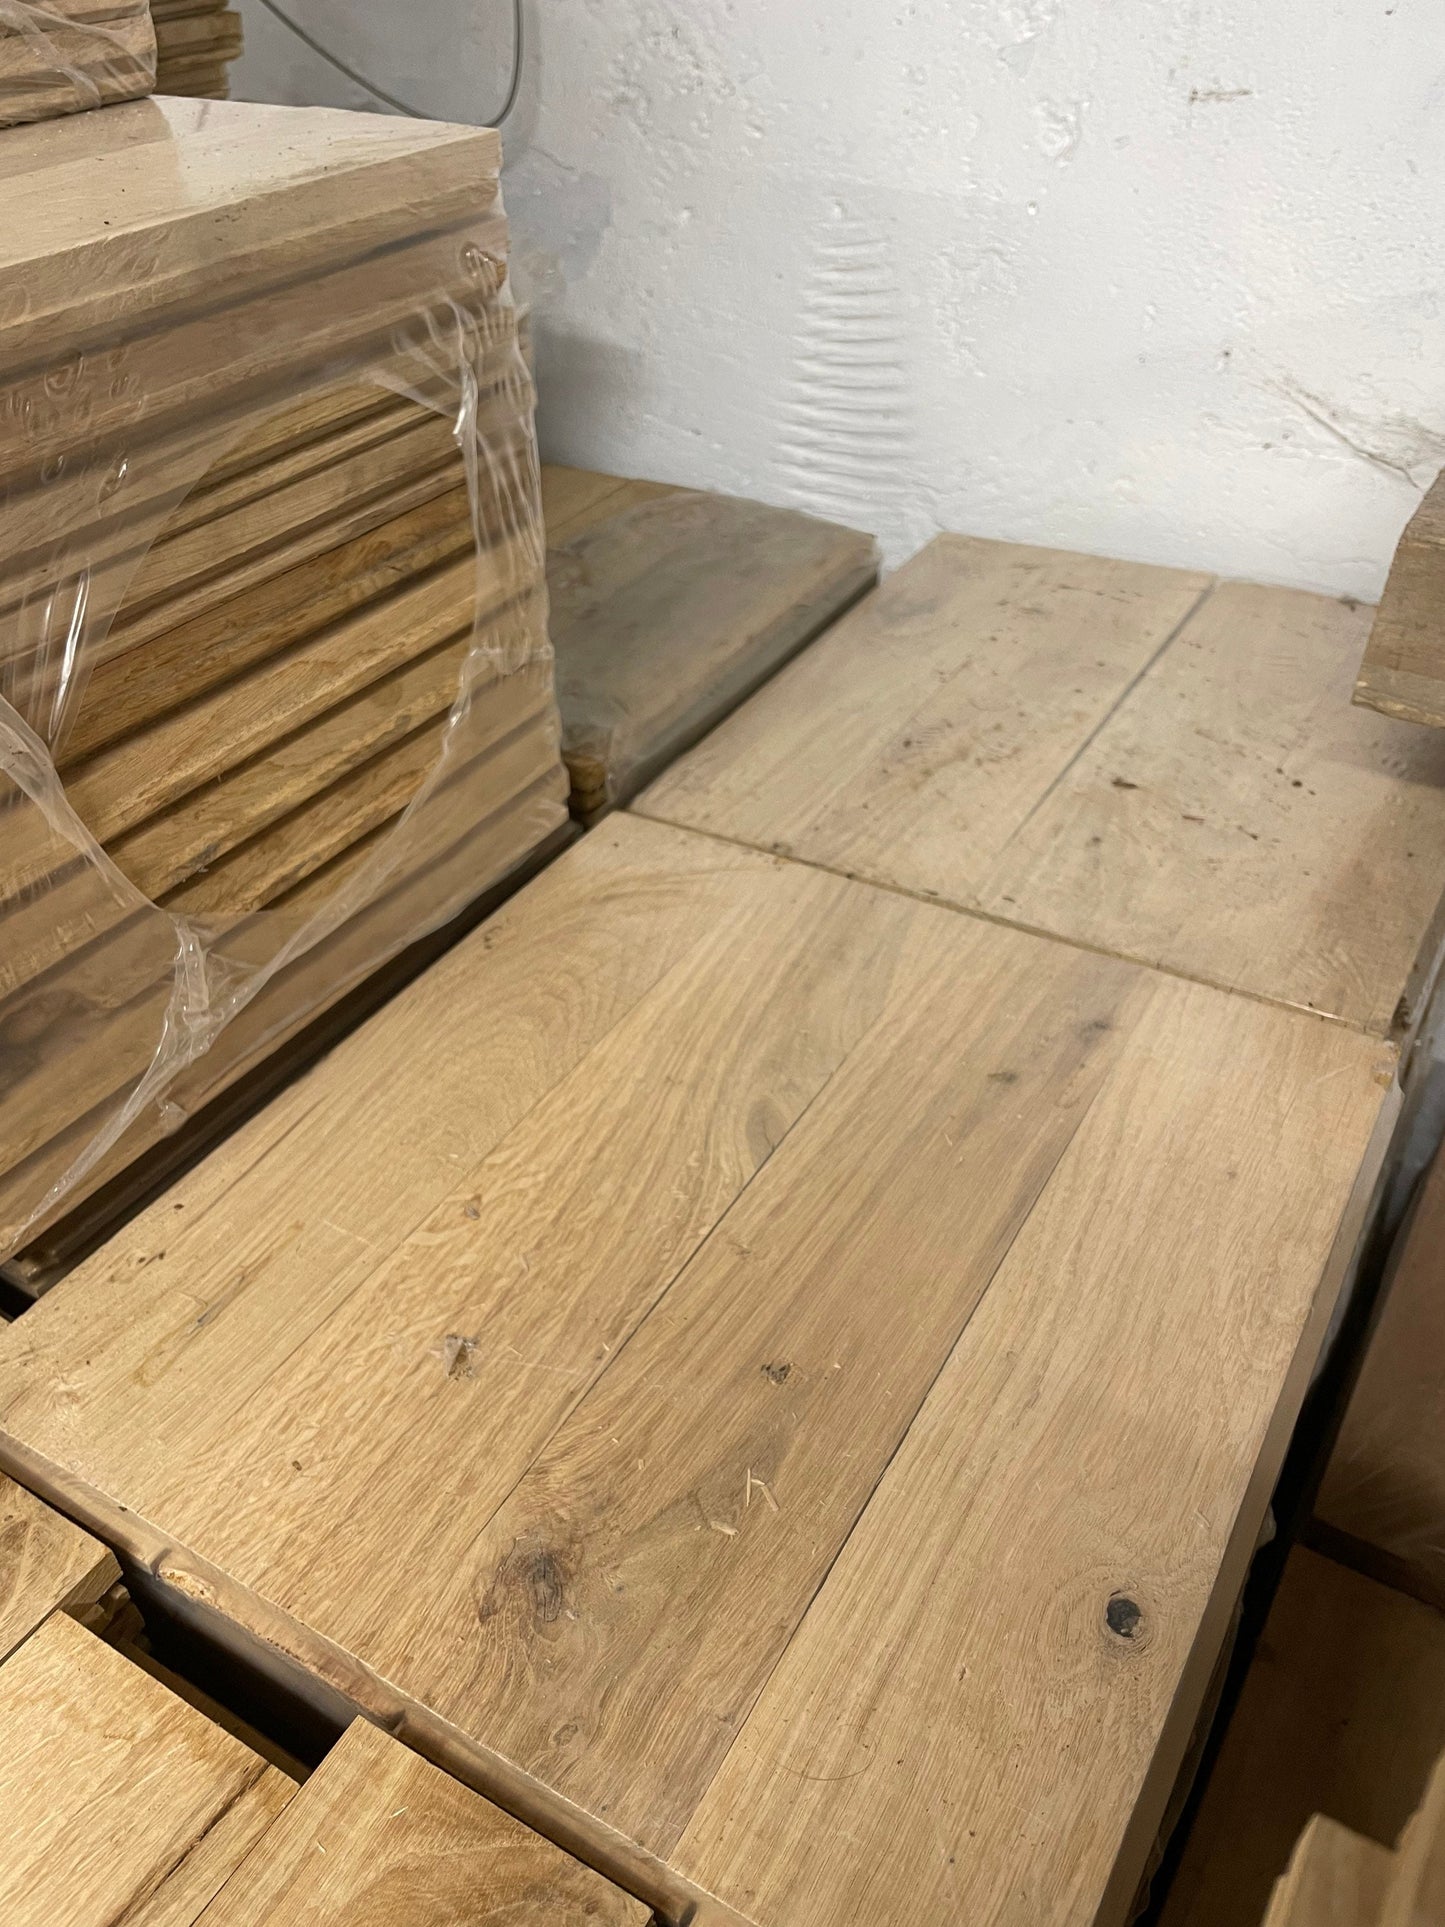 Solid Oak Parquet Herringbone Flooring, 450 x 70mm | Rustic Character Grade, Hardwood Flooring